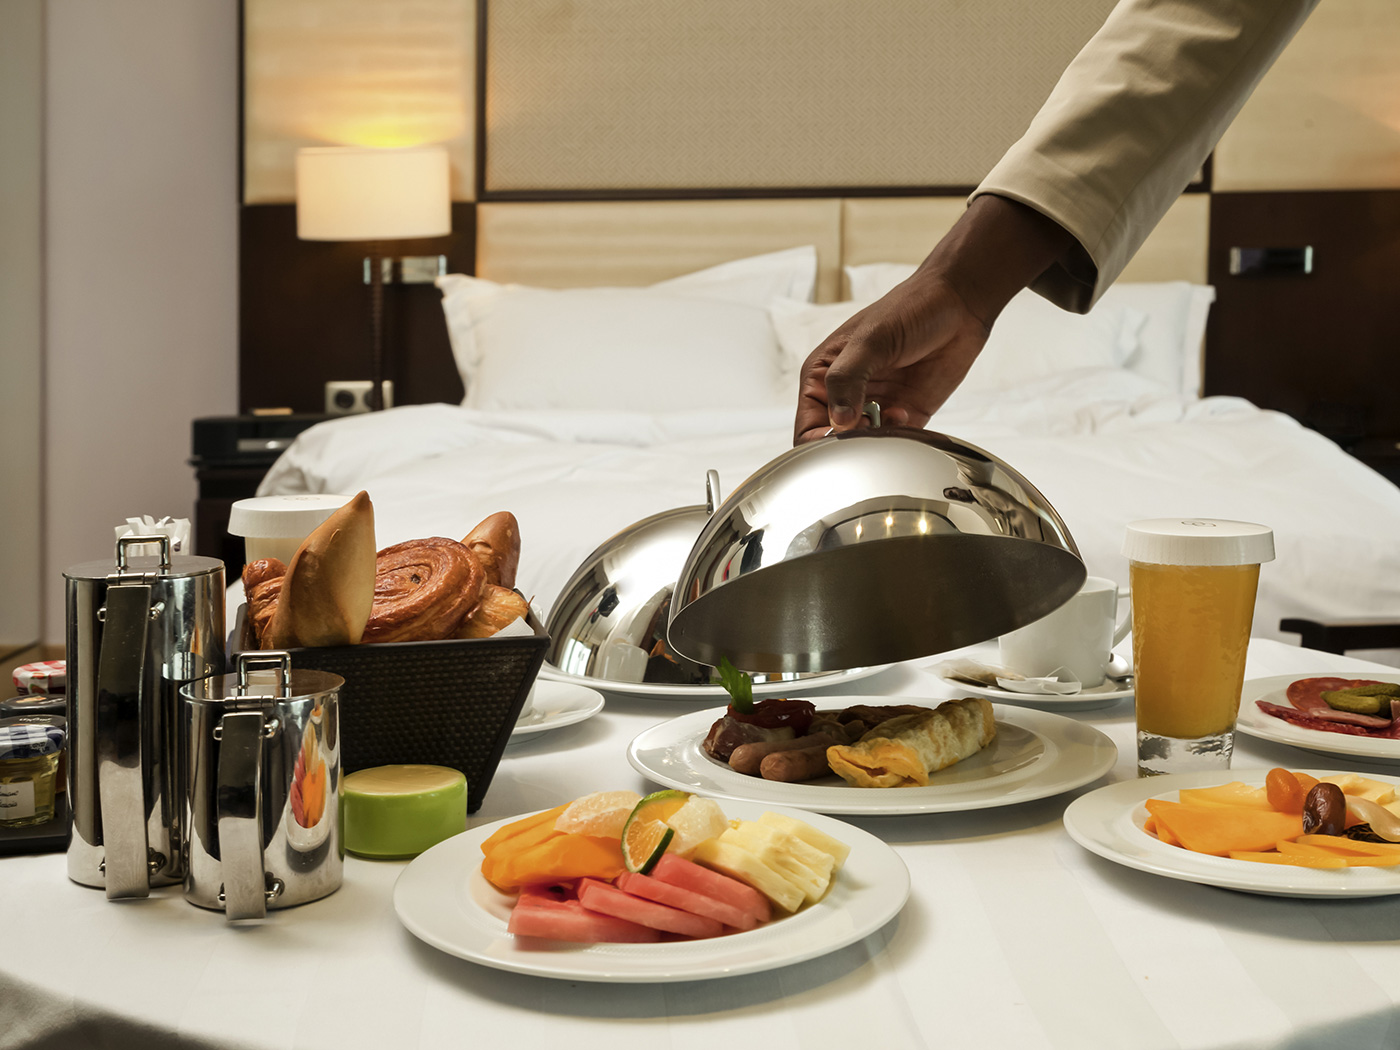 Качество услуги питания. Завтрак в номер. Рум сервис в гостинице. Завтрак в отеле рум сервис. Завтрак в гостинице.